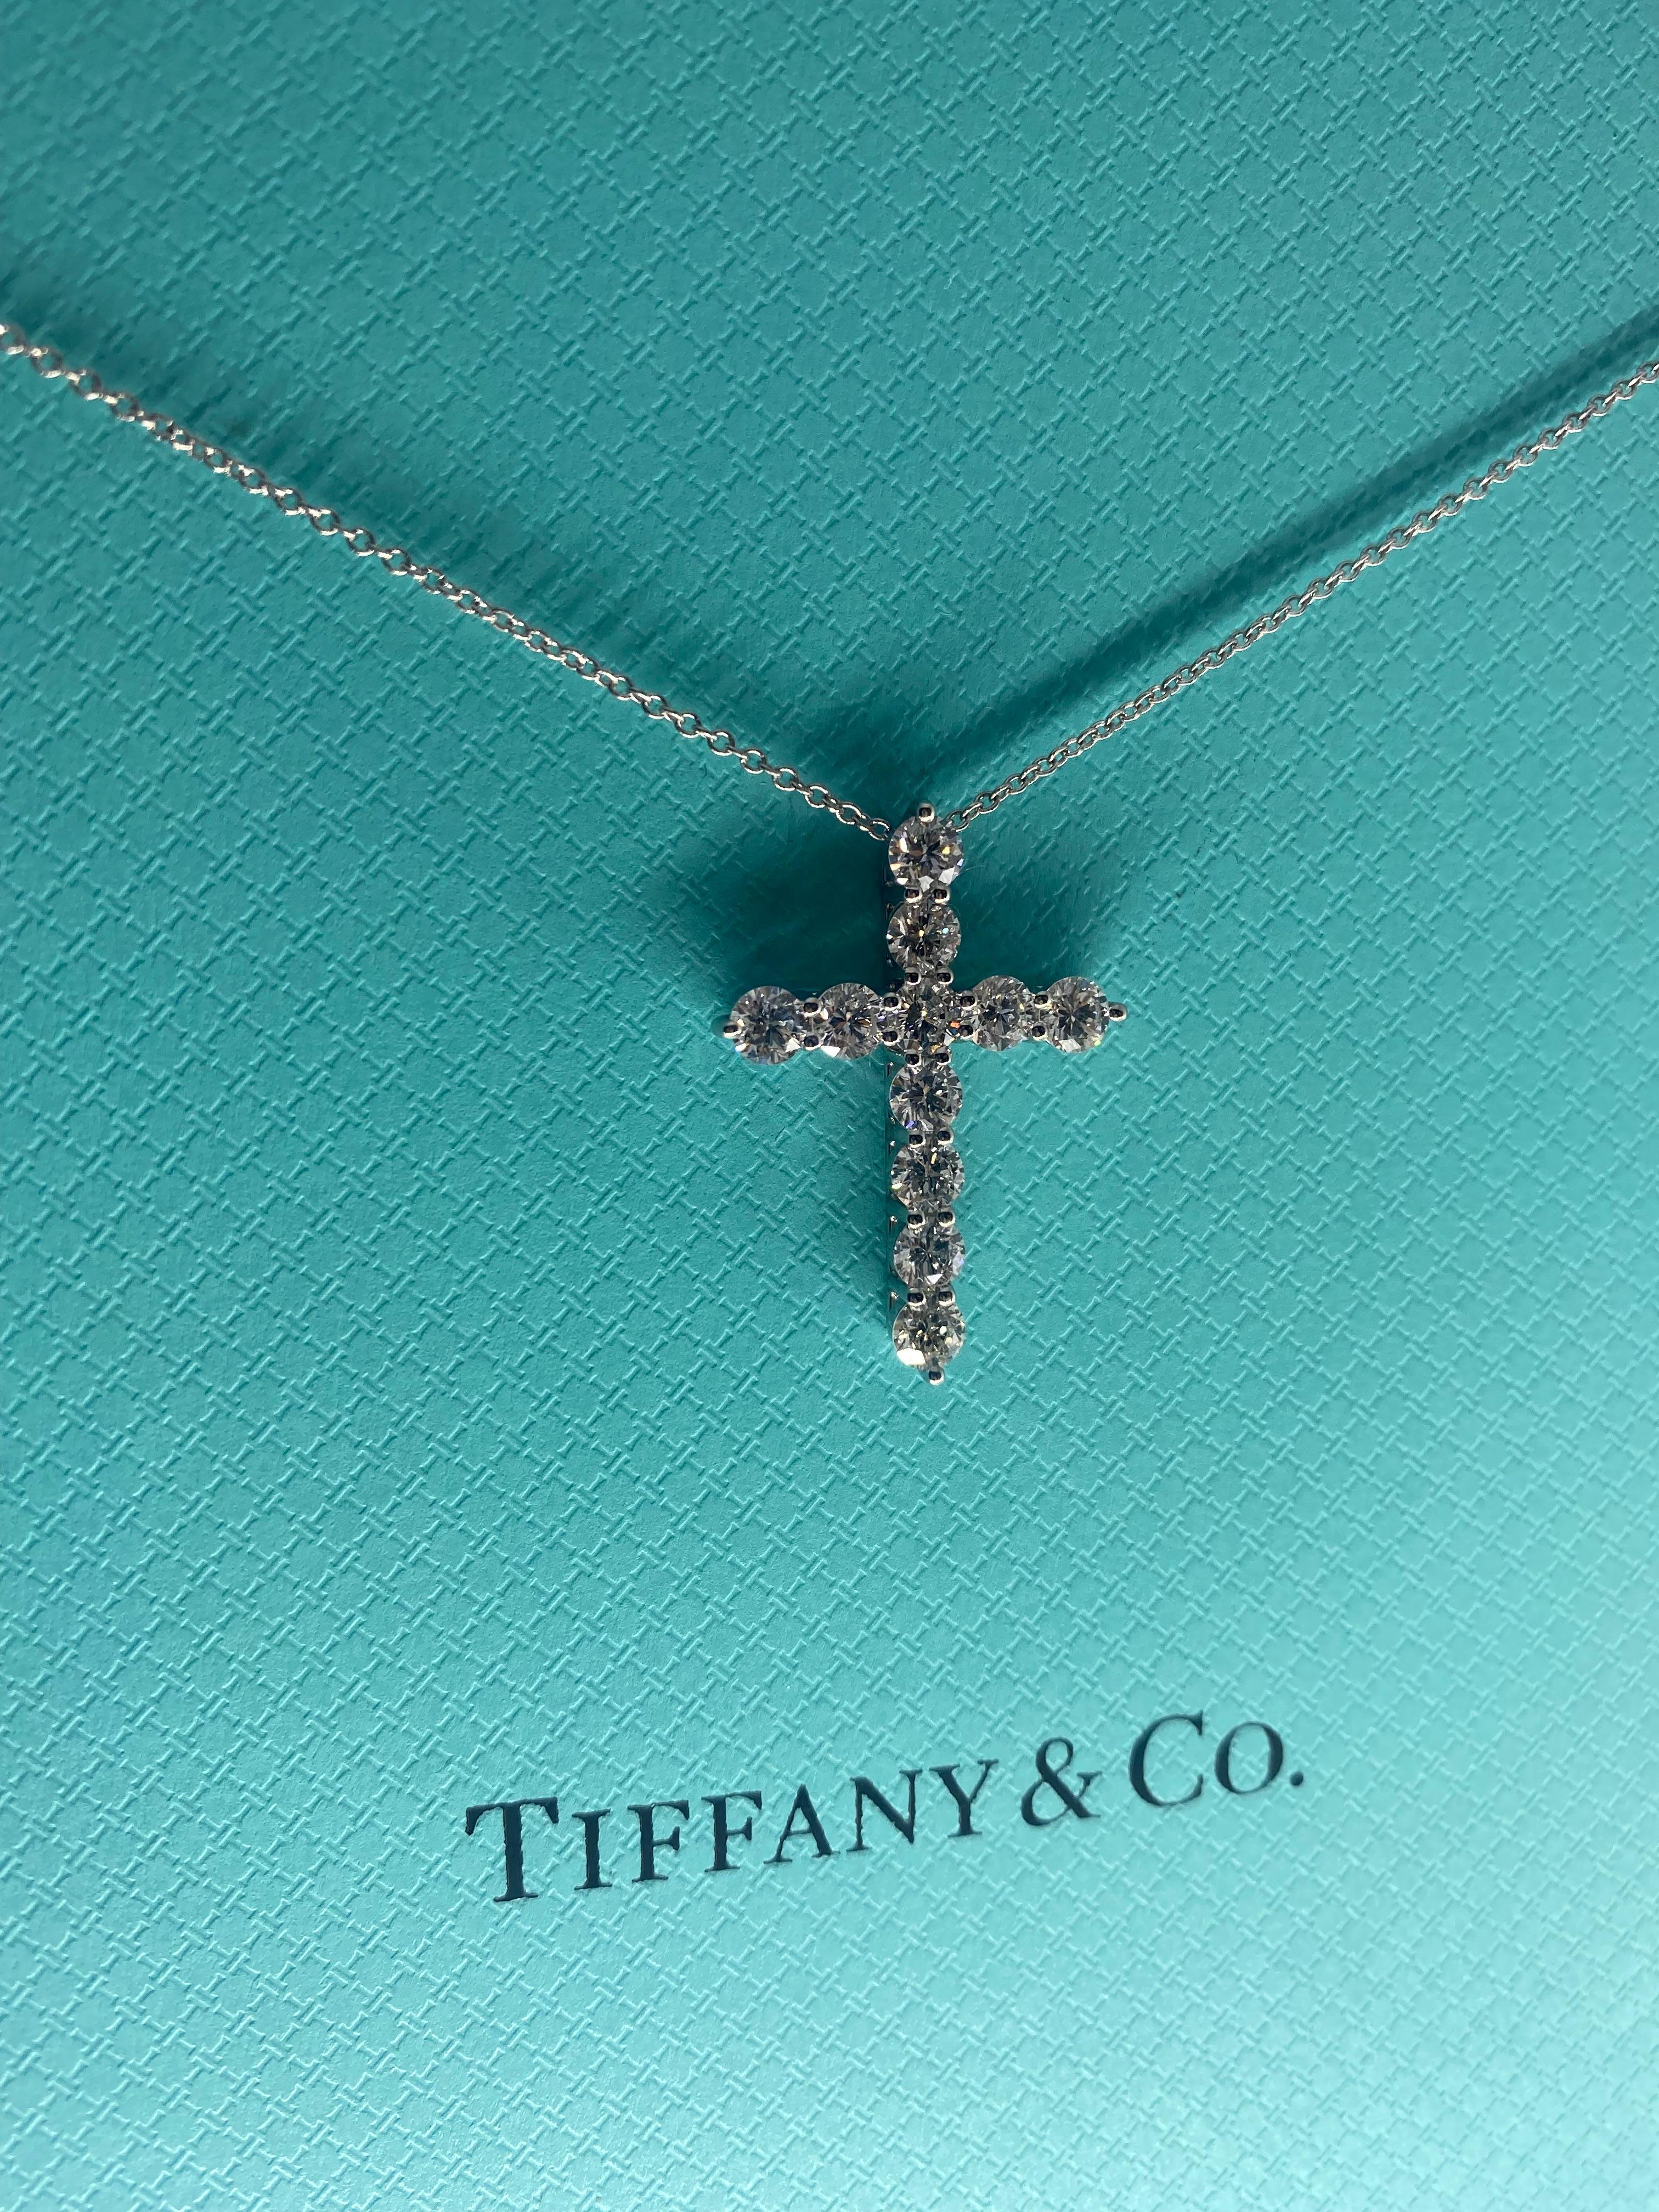 Tiffany Co Large Diamond Cross , platinum , 1.71 ctw diamonds  4